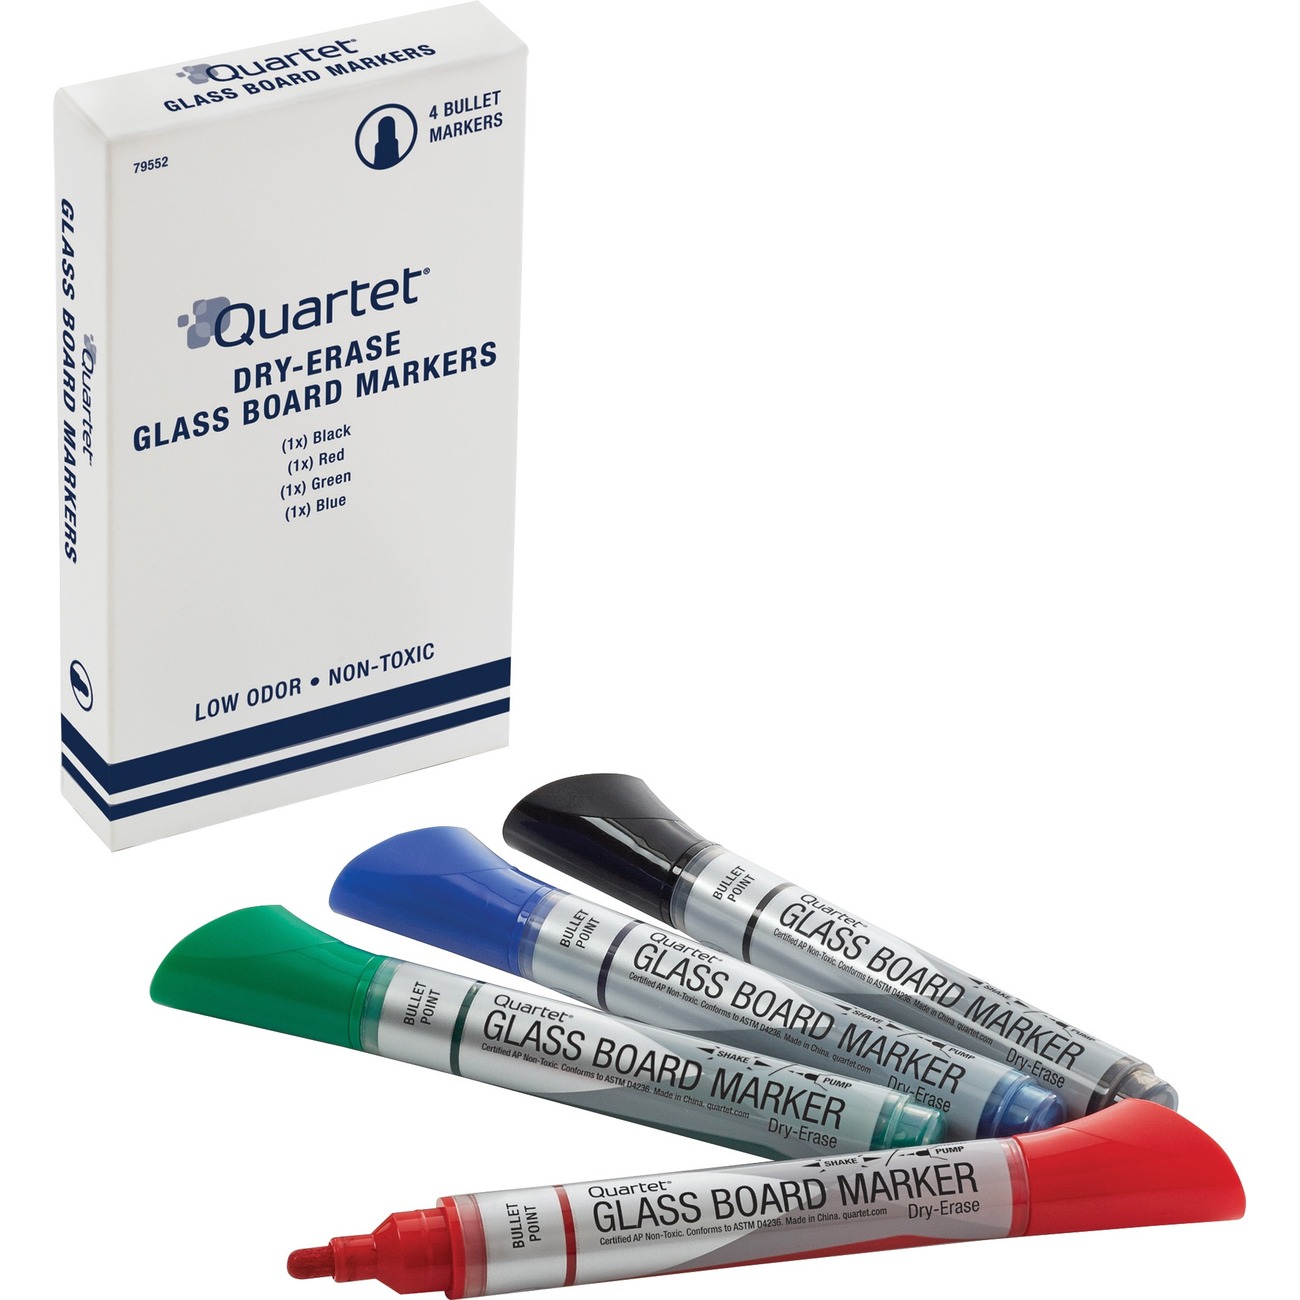 Pentel Giant Jumbo Wet Erase Chalk Board Marker Pens Assorted Colours -  Pack 4 for sale online